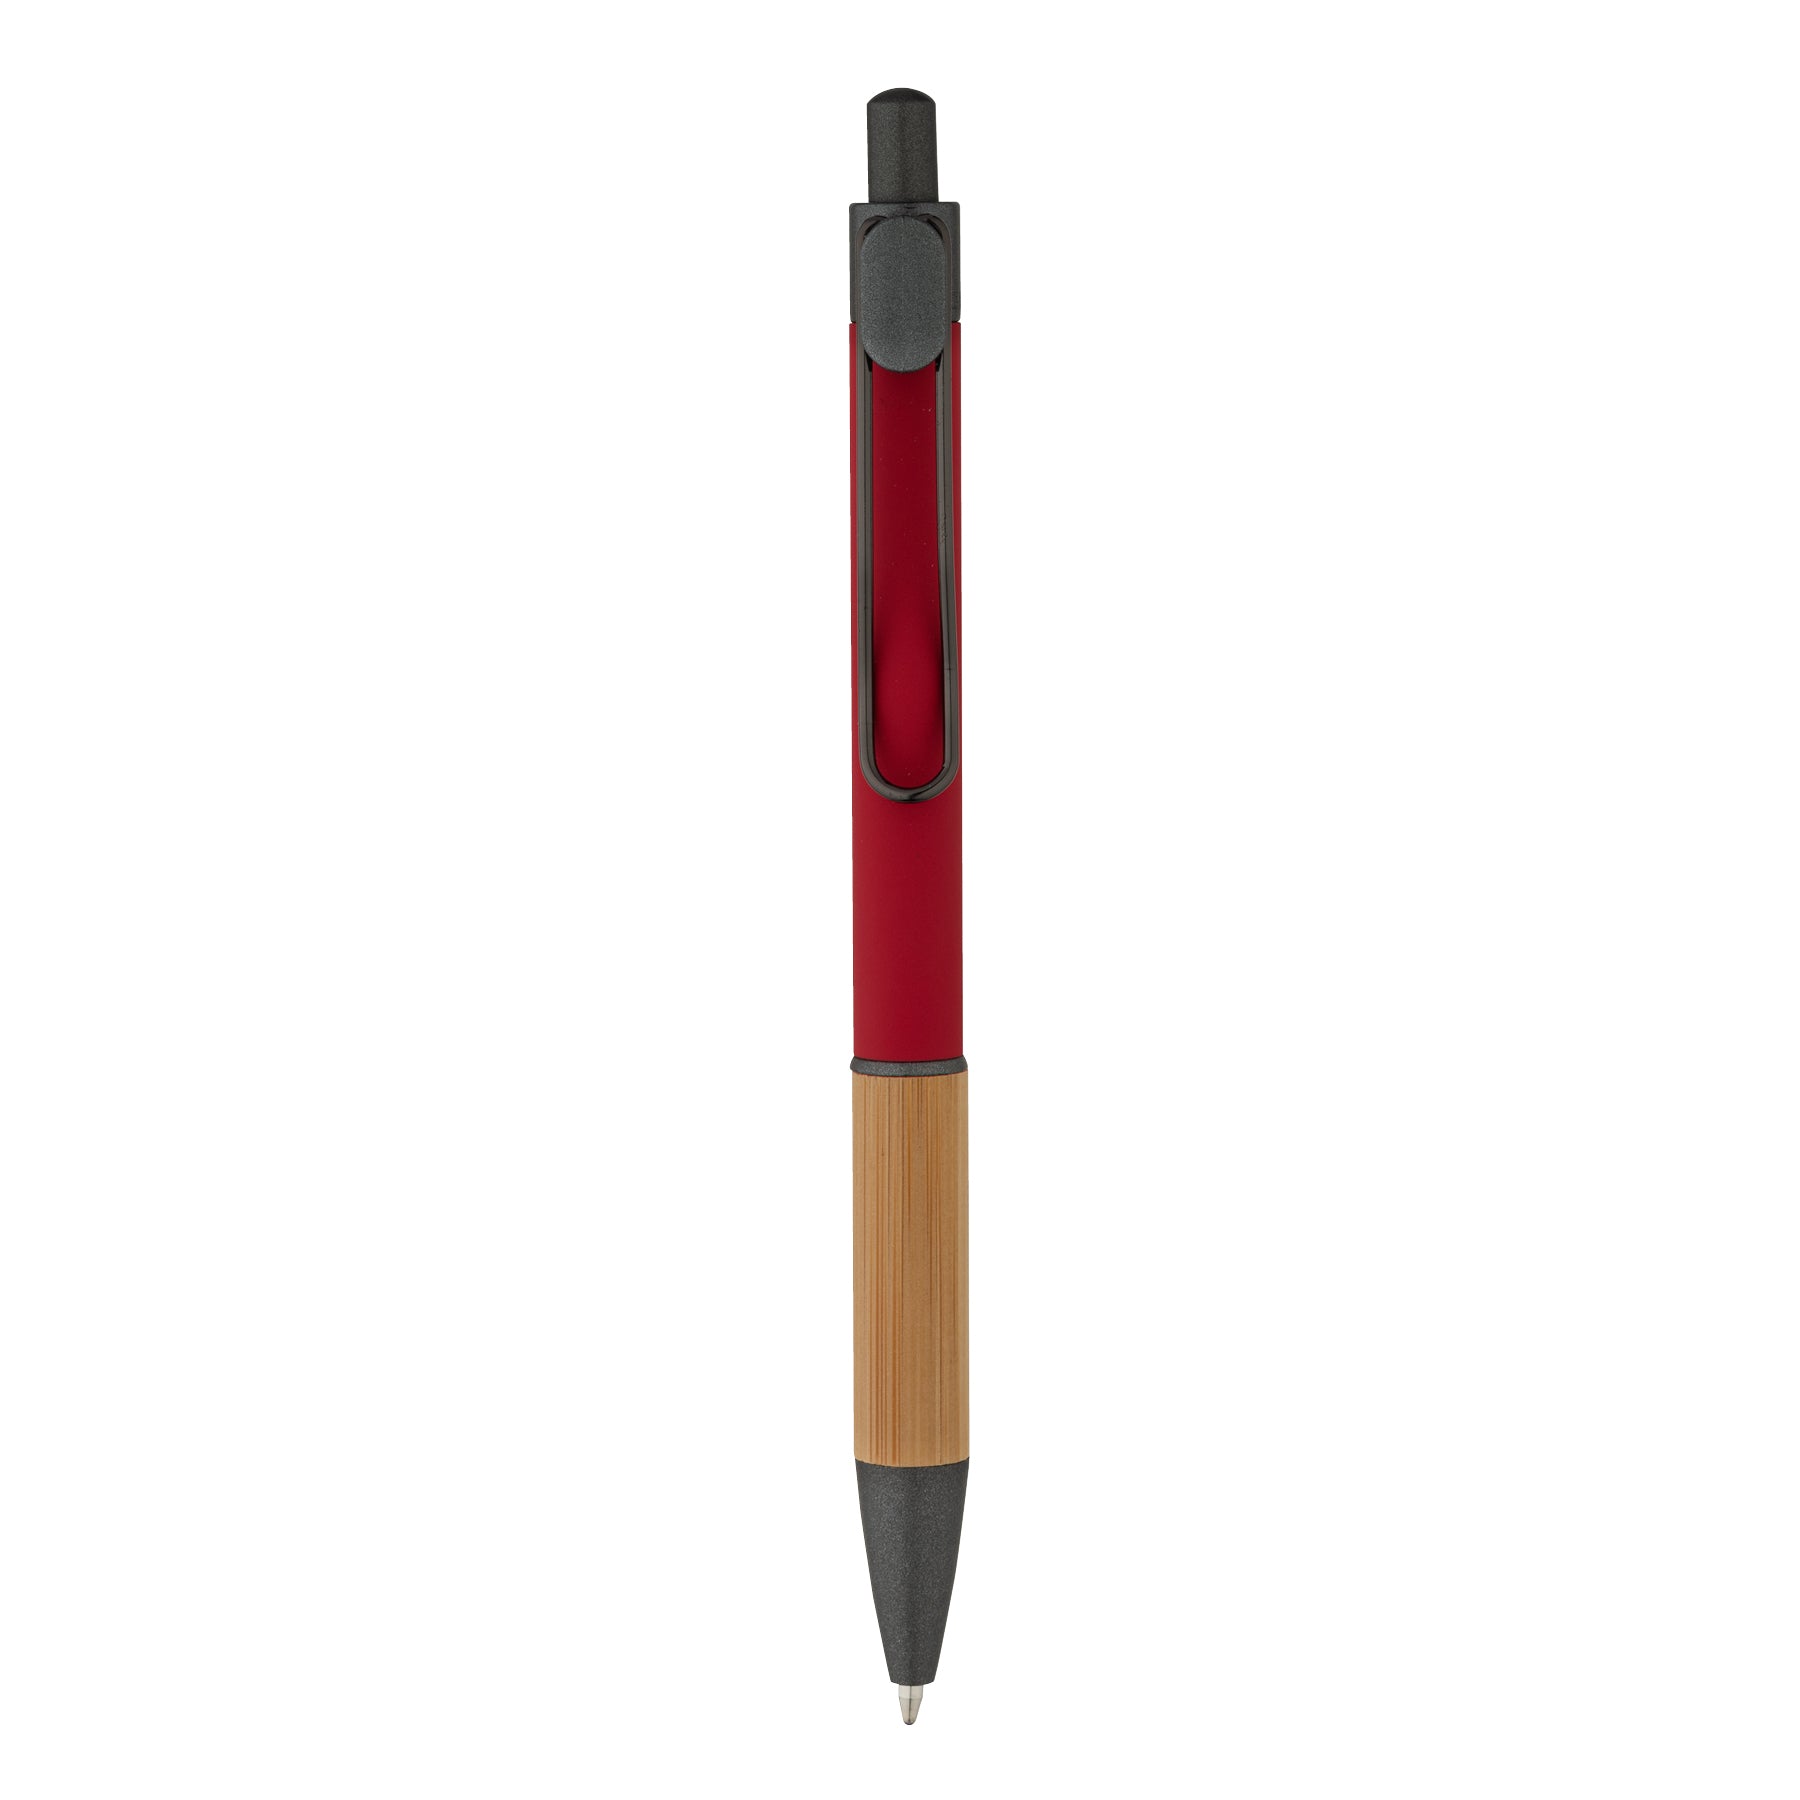 Customized manoa ballpoint bamboo pen in red.